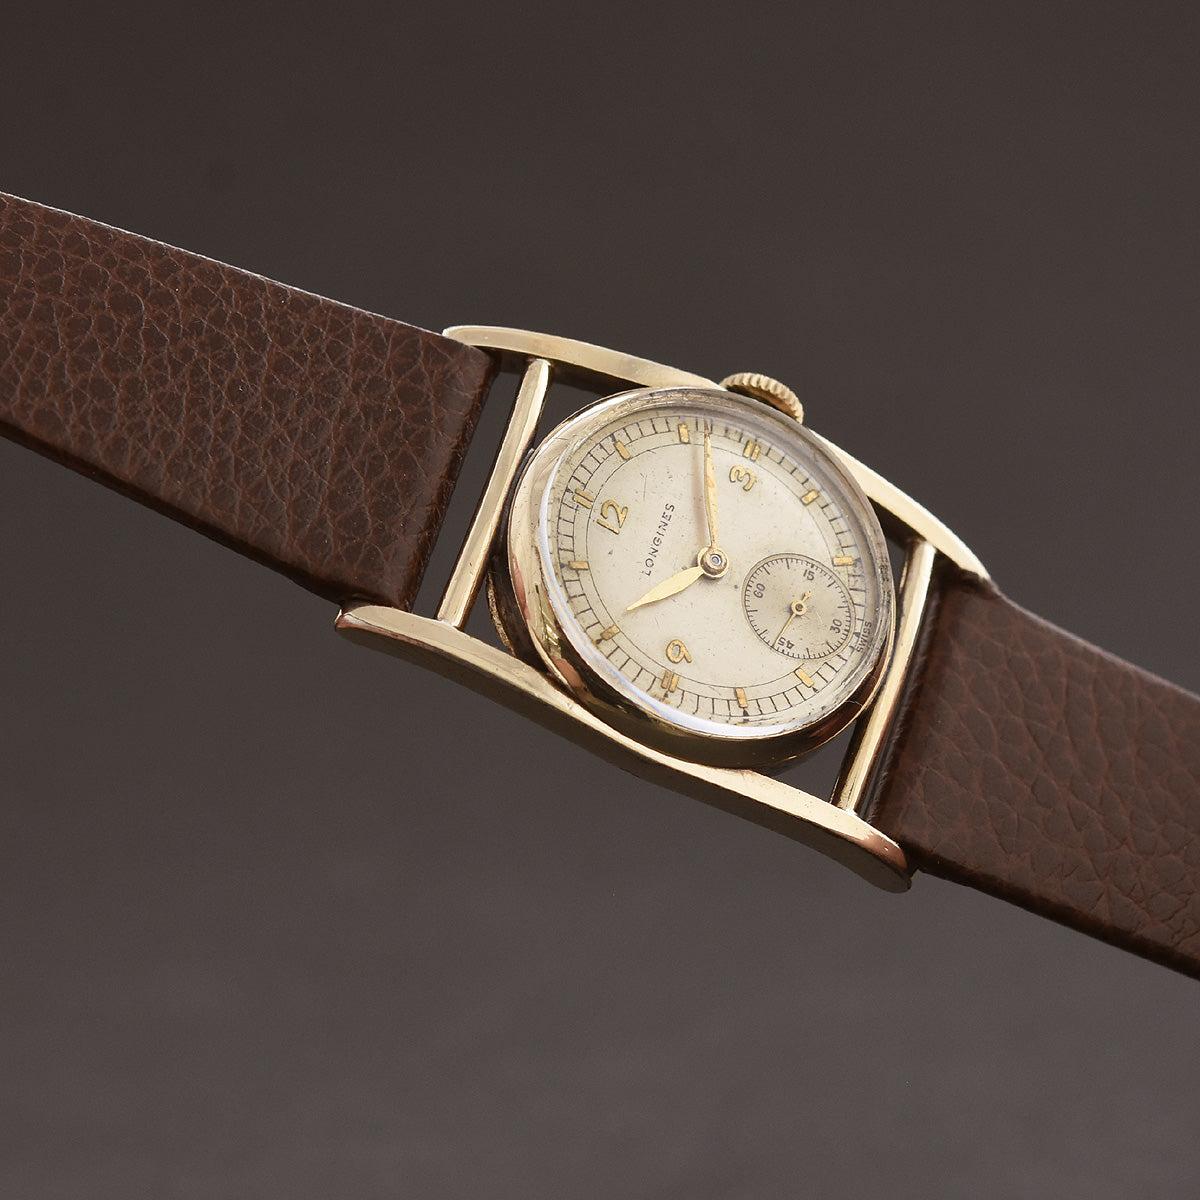 1945 LONGINES 'Mainliner' Gents Vintage Dress Watch